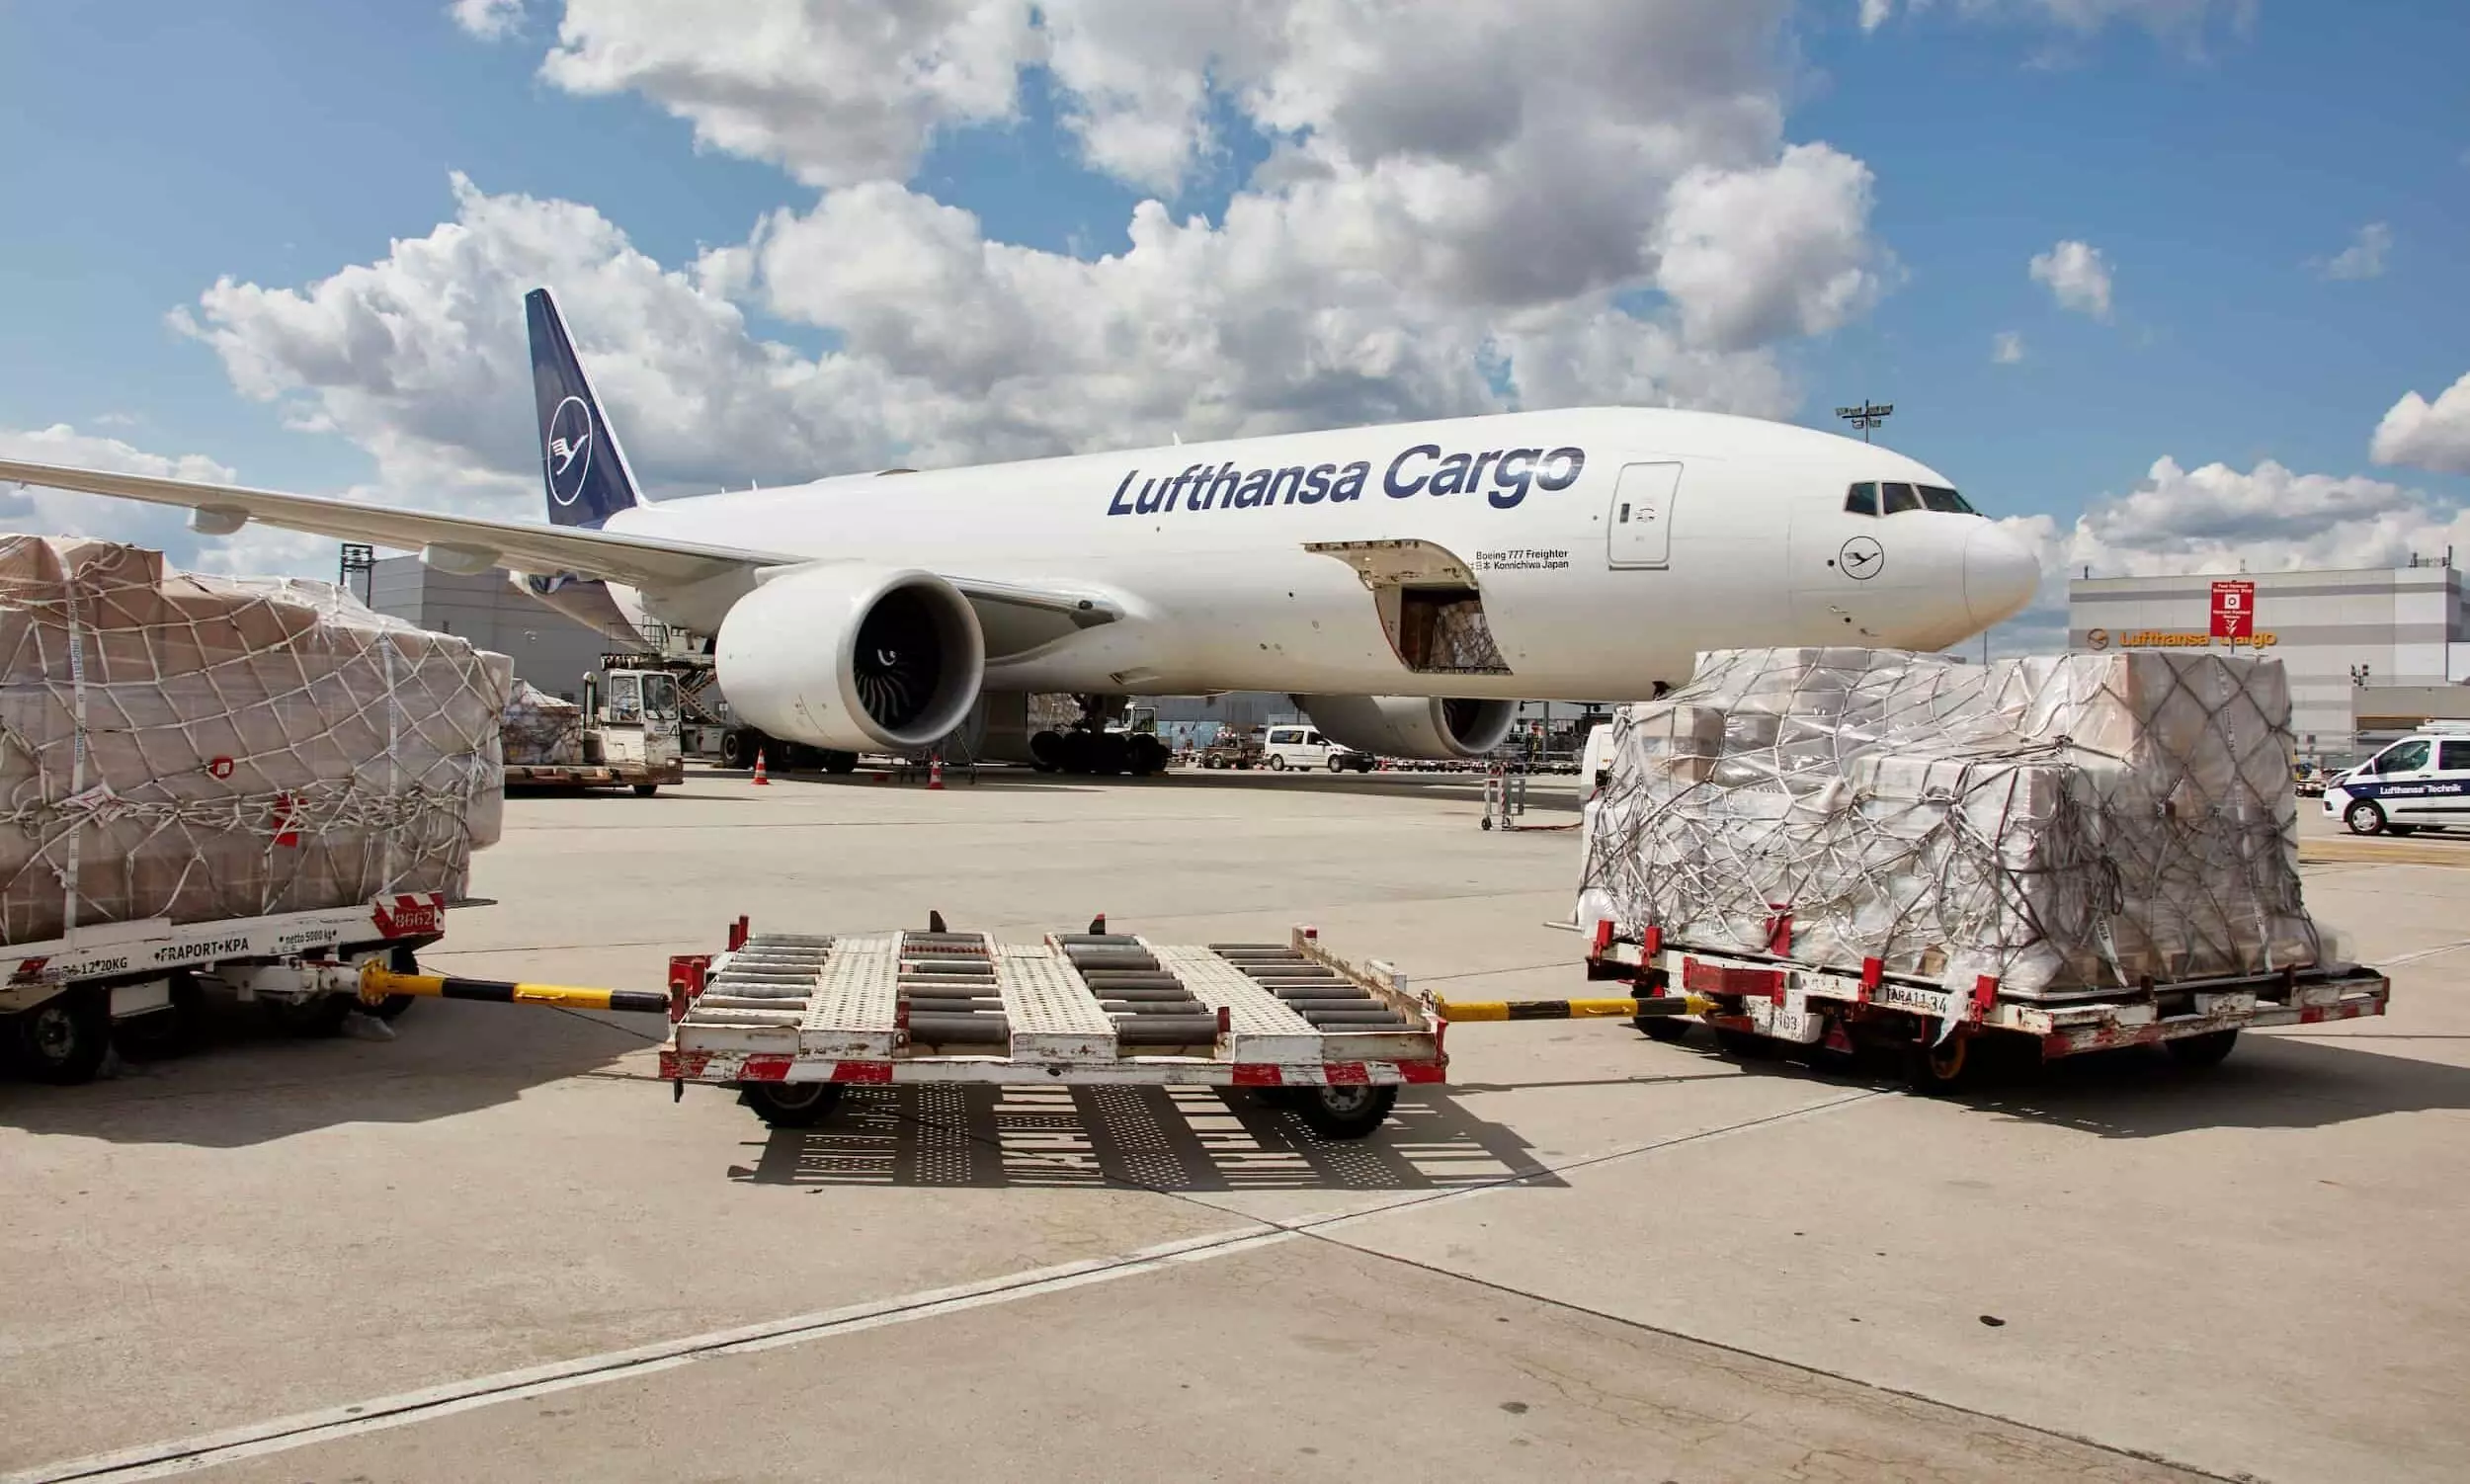 CB Customs Broker clears 50 million shipments